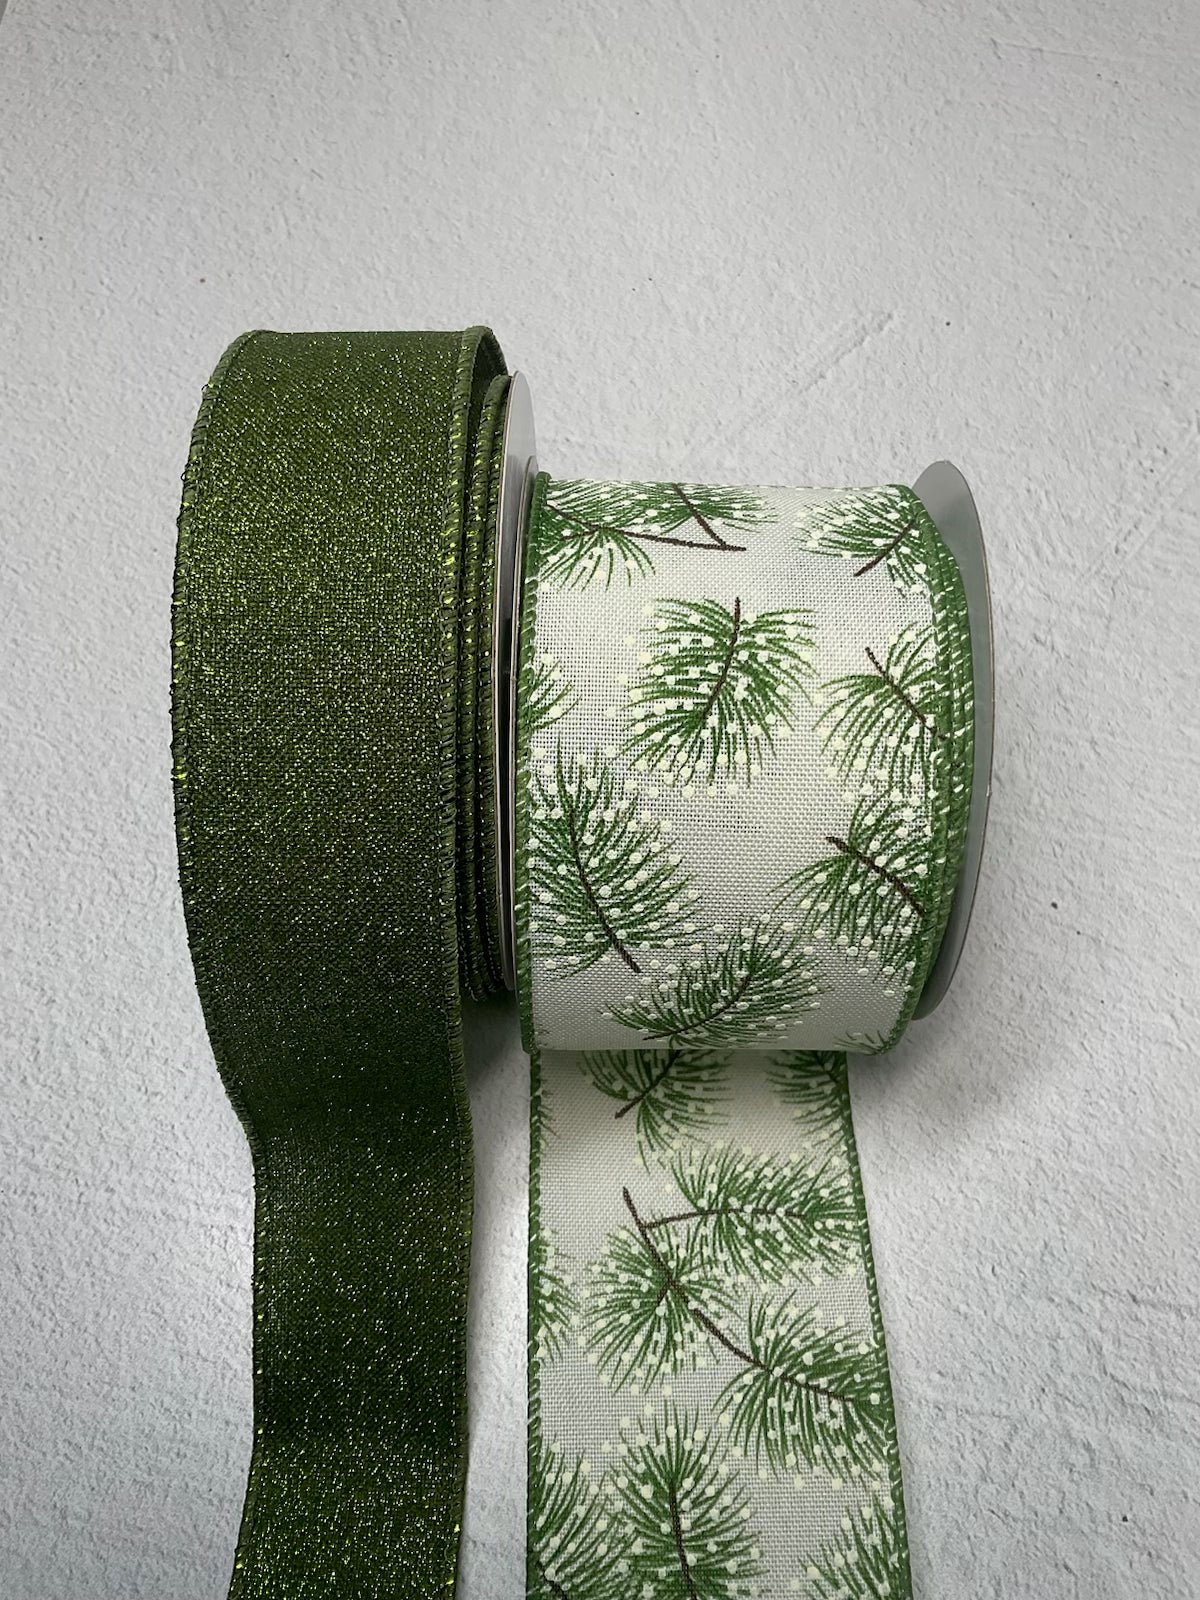 Winter bow bundle - moss green pine shimmer - Greenery Market